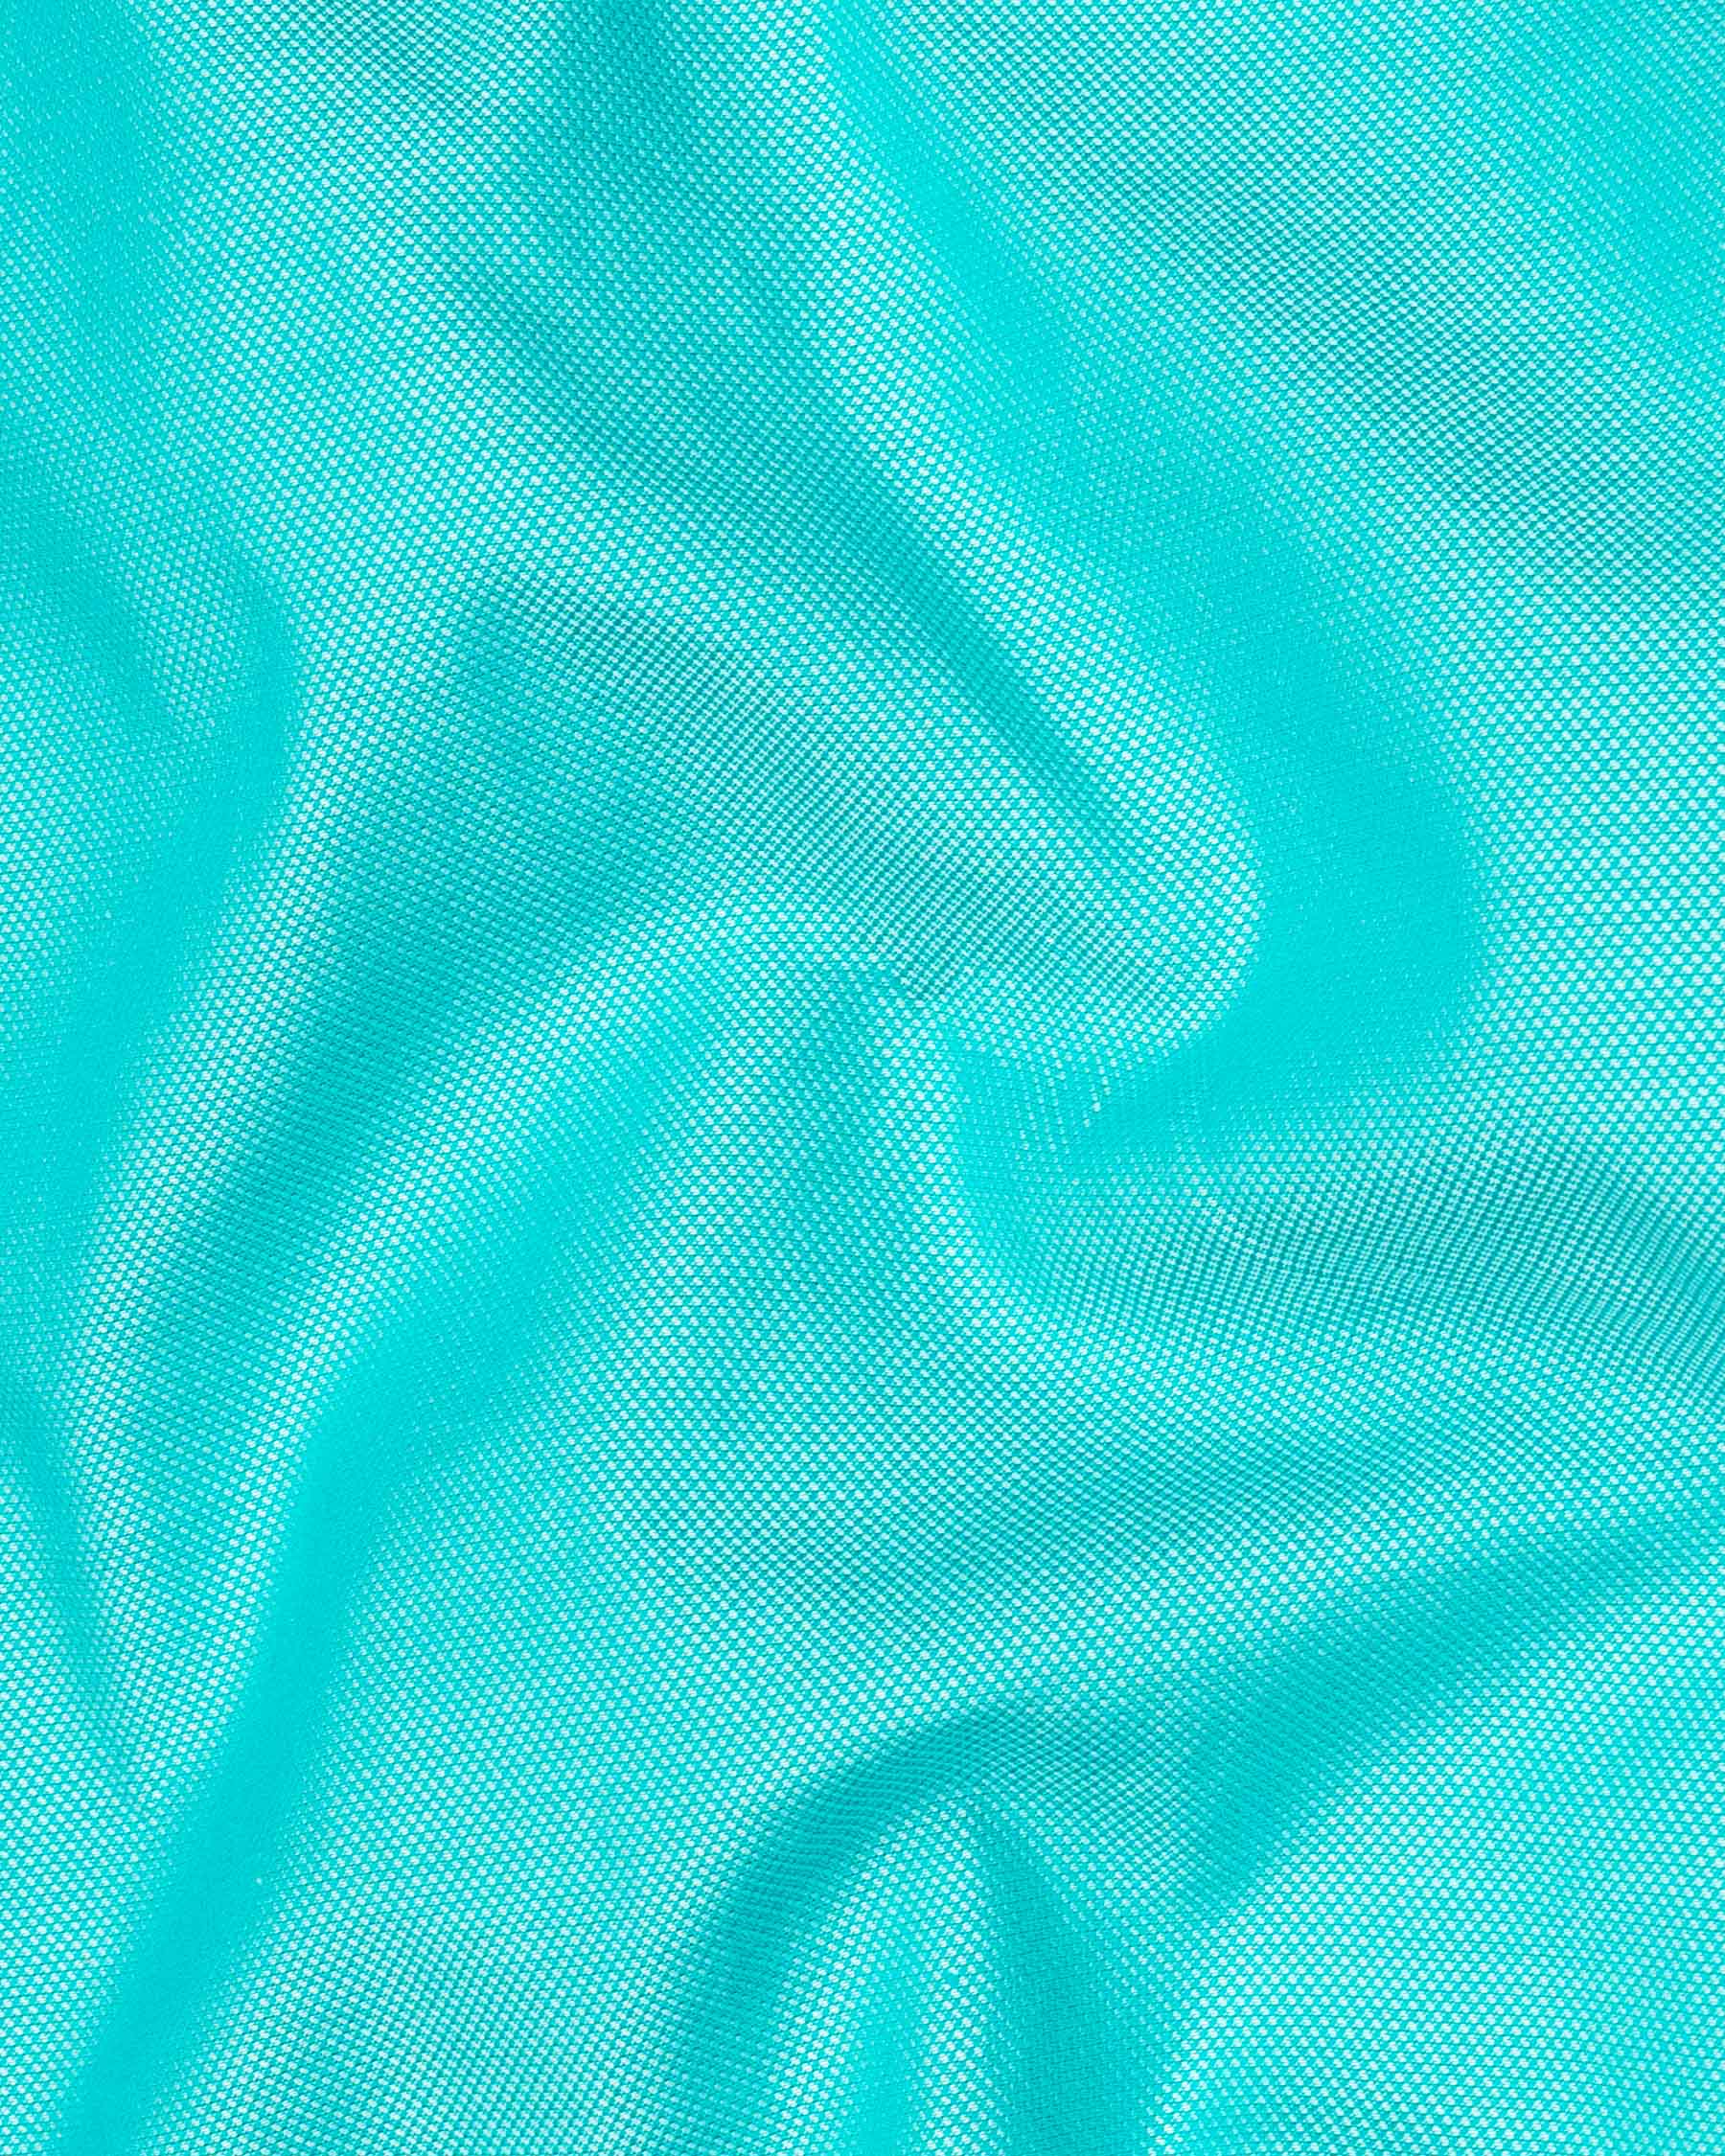 Scrunchie Dobby Textured Premium Giza Cotton Shirt 6563-BLK-38,6563-BLK-H-38,6563-BLK-39,6563-BLK-H-39,6563-BLK-40,6563-BLK-H-40,6563-BLK-42,6563-BLK-H-42,6563-BLK-44,6563-BLK-H-44,6563-BLK-46,6563-BLK-H-46,6563-BLK-48,6563-BLK-H-48,6563-BLK-50,6563-BLK-H-50,6563-BLK-52,6563-BLK-H-52